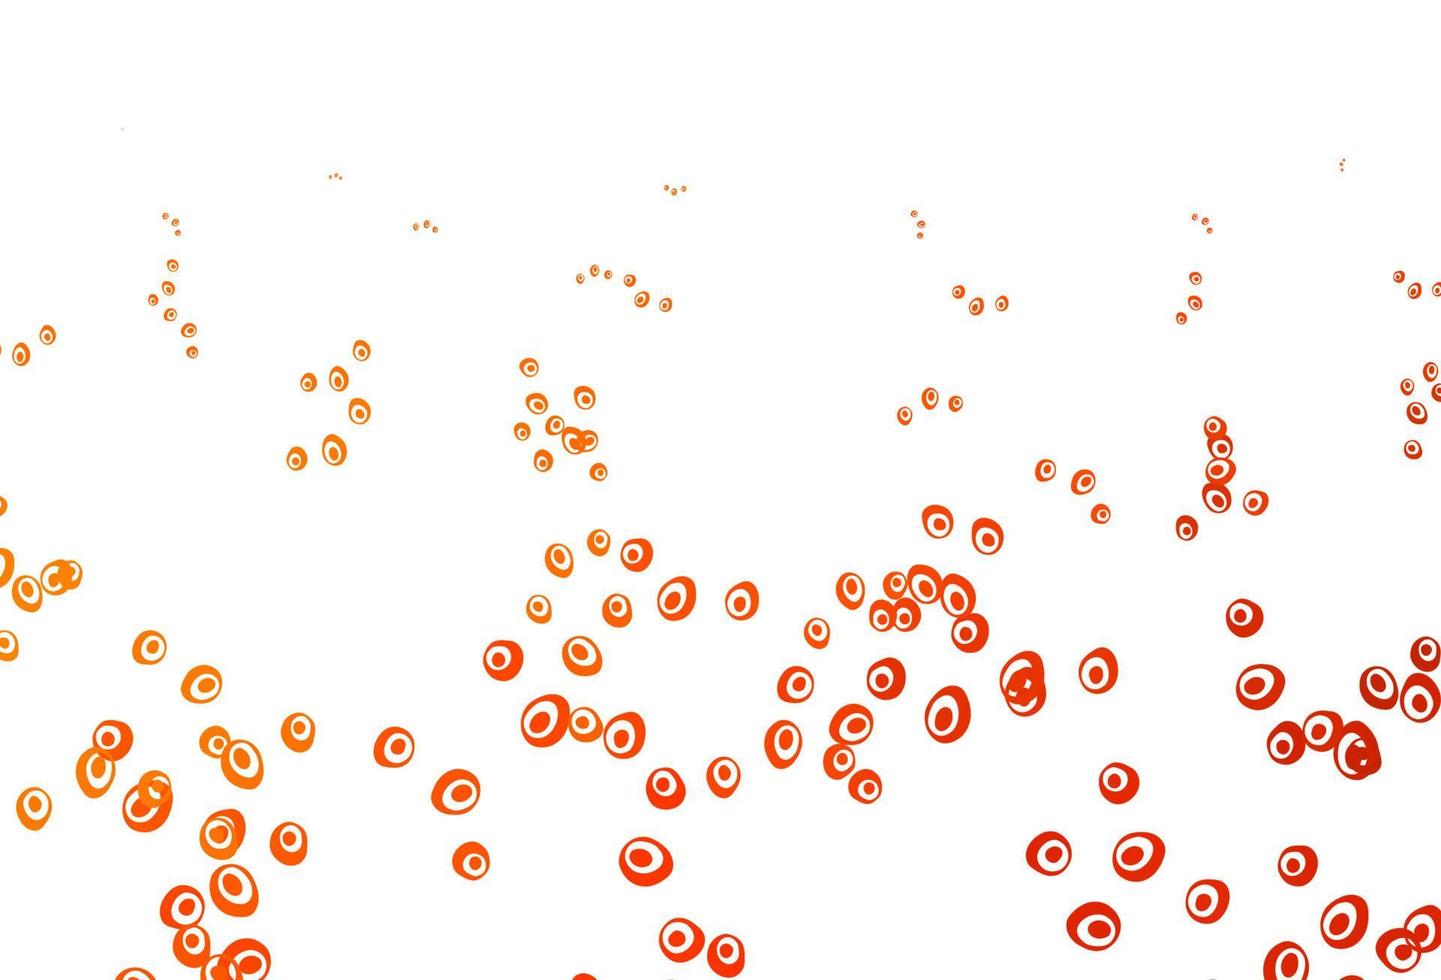 ljus orange vektor bakgrund med bubblor.